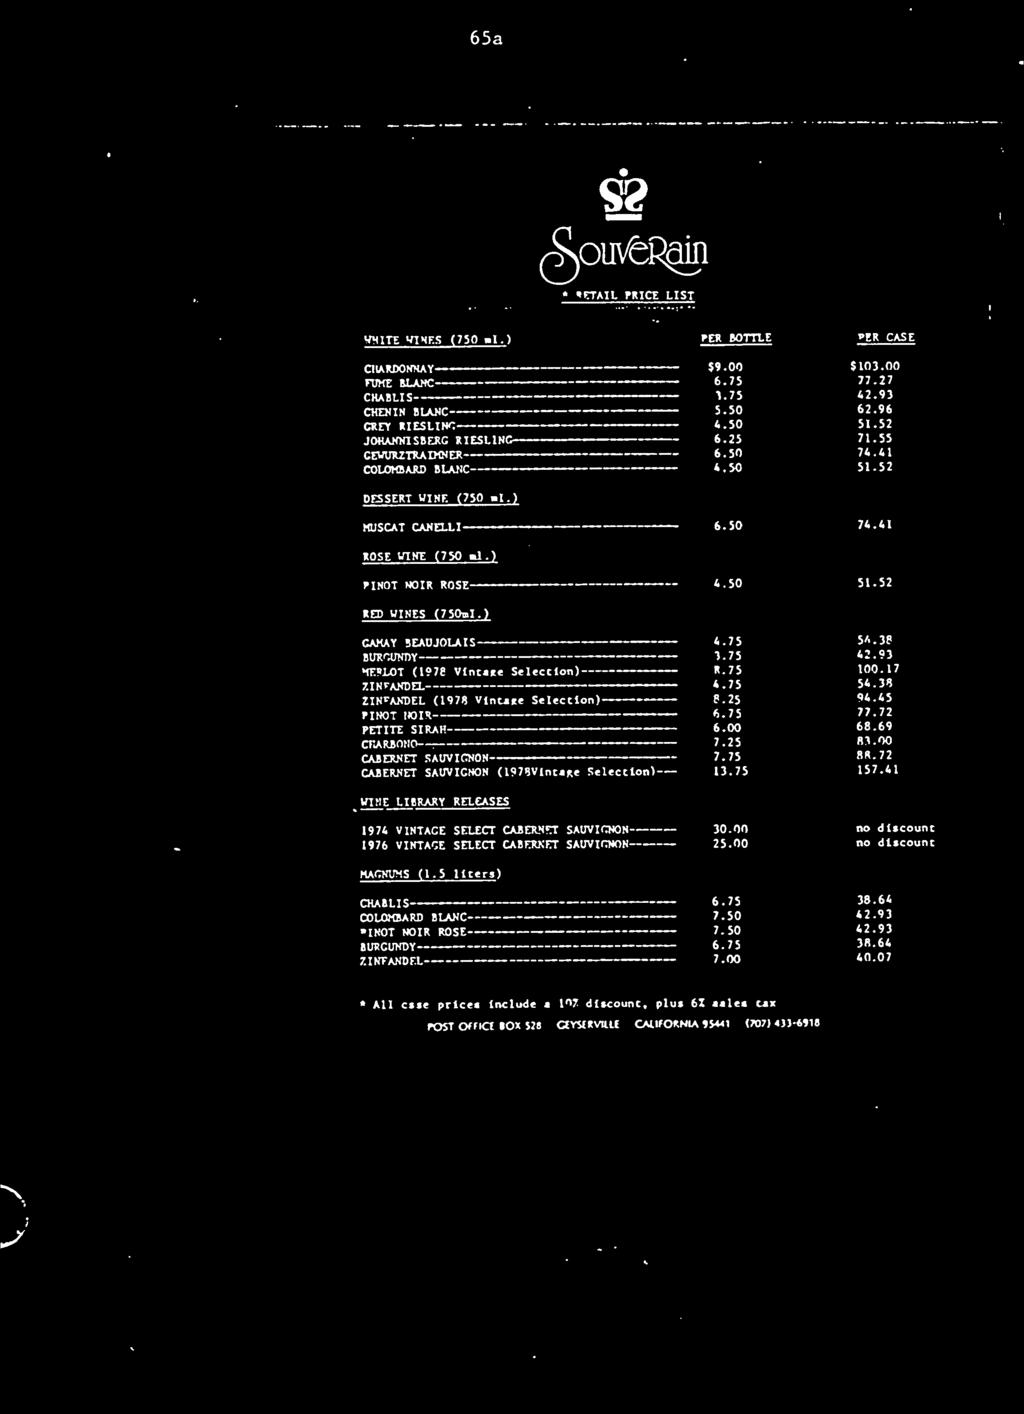 ) CAMAY SEAUJOLAIS BUROUNDY MELOT (1978 Vintage Selection) IIN*ANDEL (197 Vlnuxe Selection) MNOT IWIS PETITI SIRAR CHARBOHP : CABERNET SAUVICWON CABERNET SAUVICNON (197VlntRe Selectloa) UIHE LIBRARY